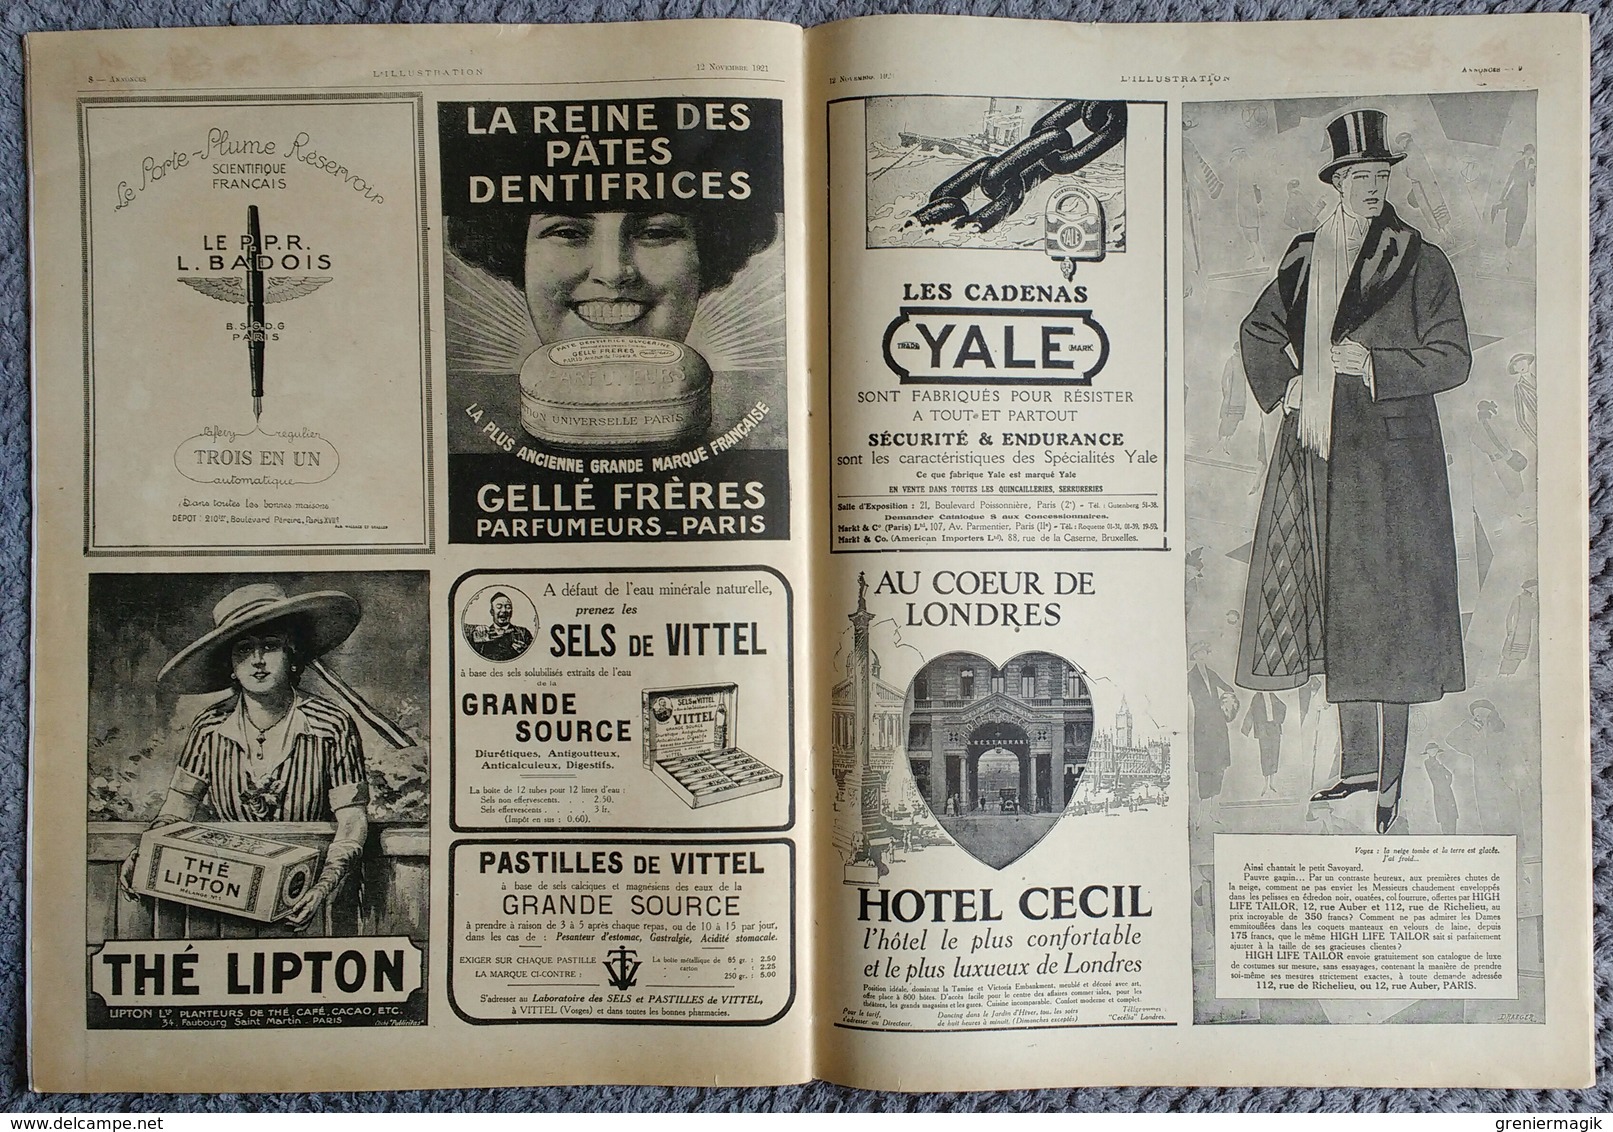 L'Illustration 4106 12 novembre 1921 Landru/Clément Ader/Charles de Habsbourg/Georges Villa/Rabelais à Montpellier